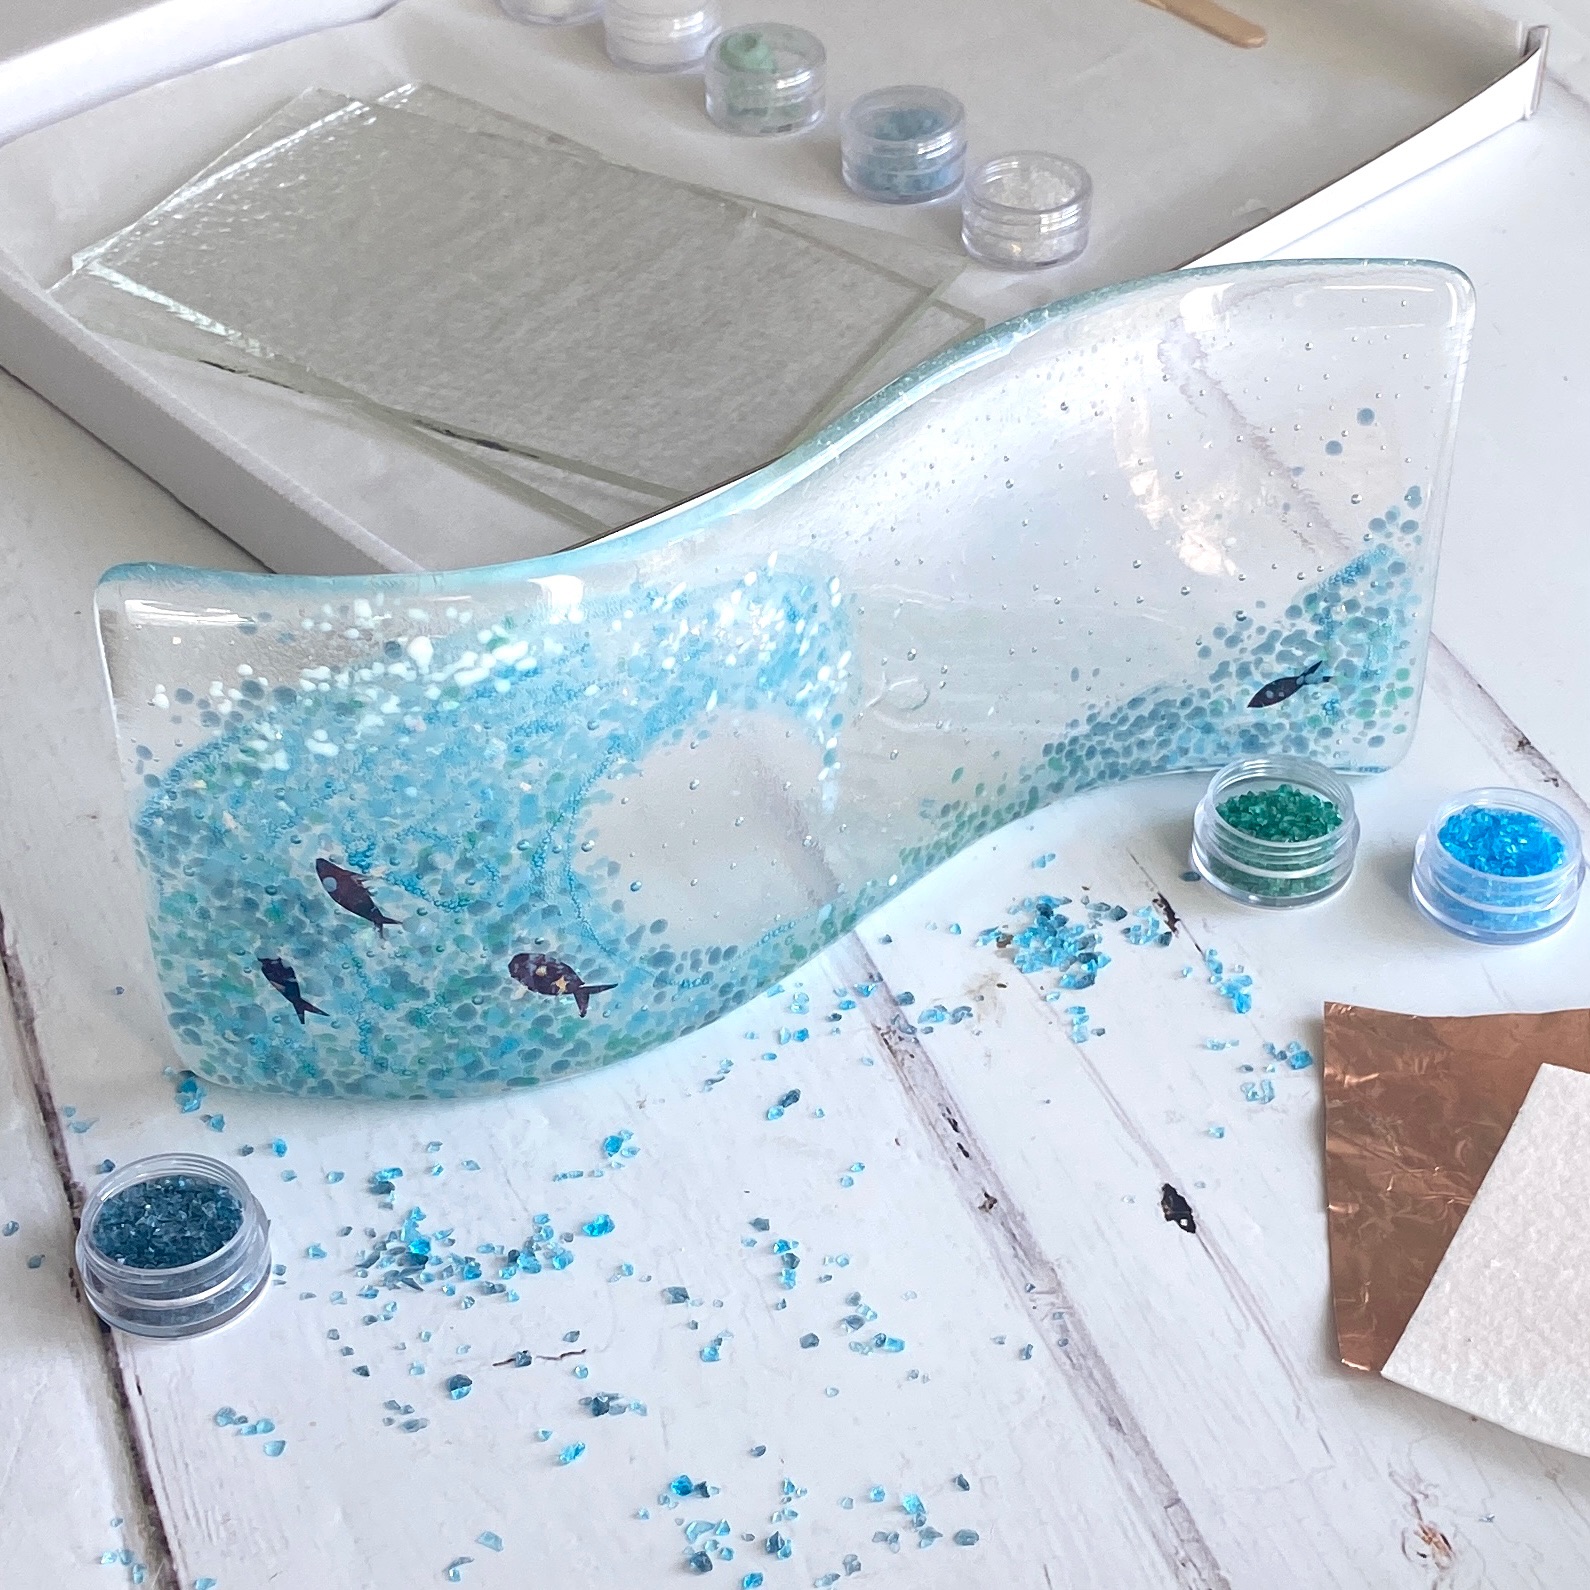 Make at home fused glass kit blue birds